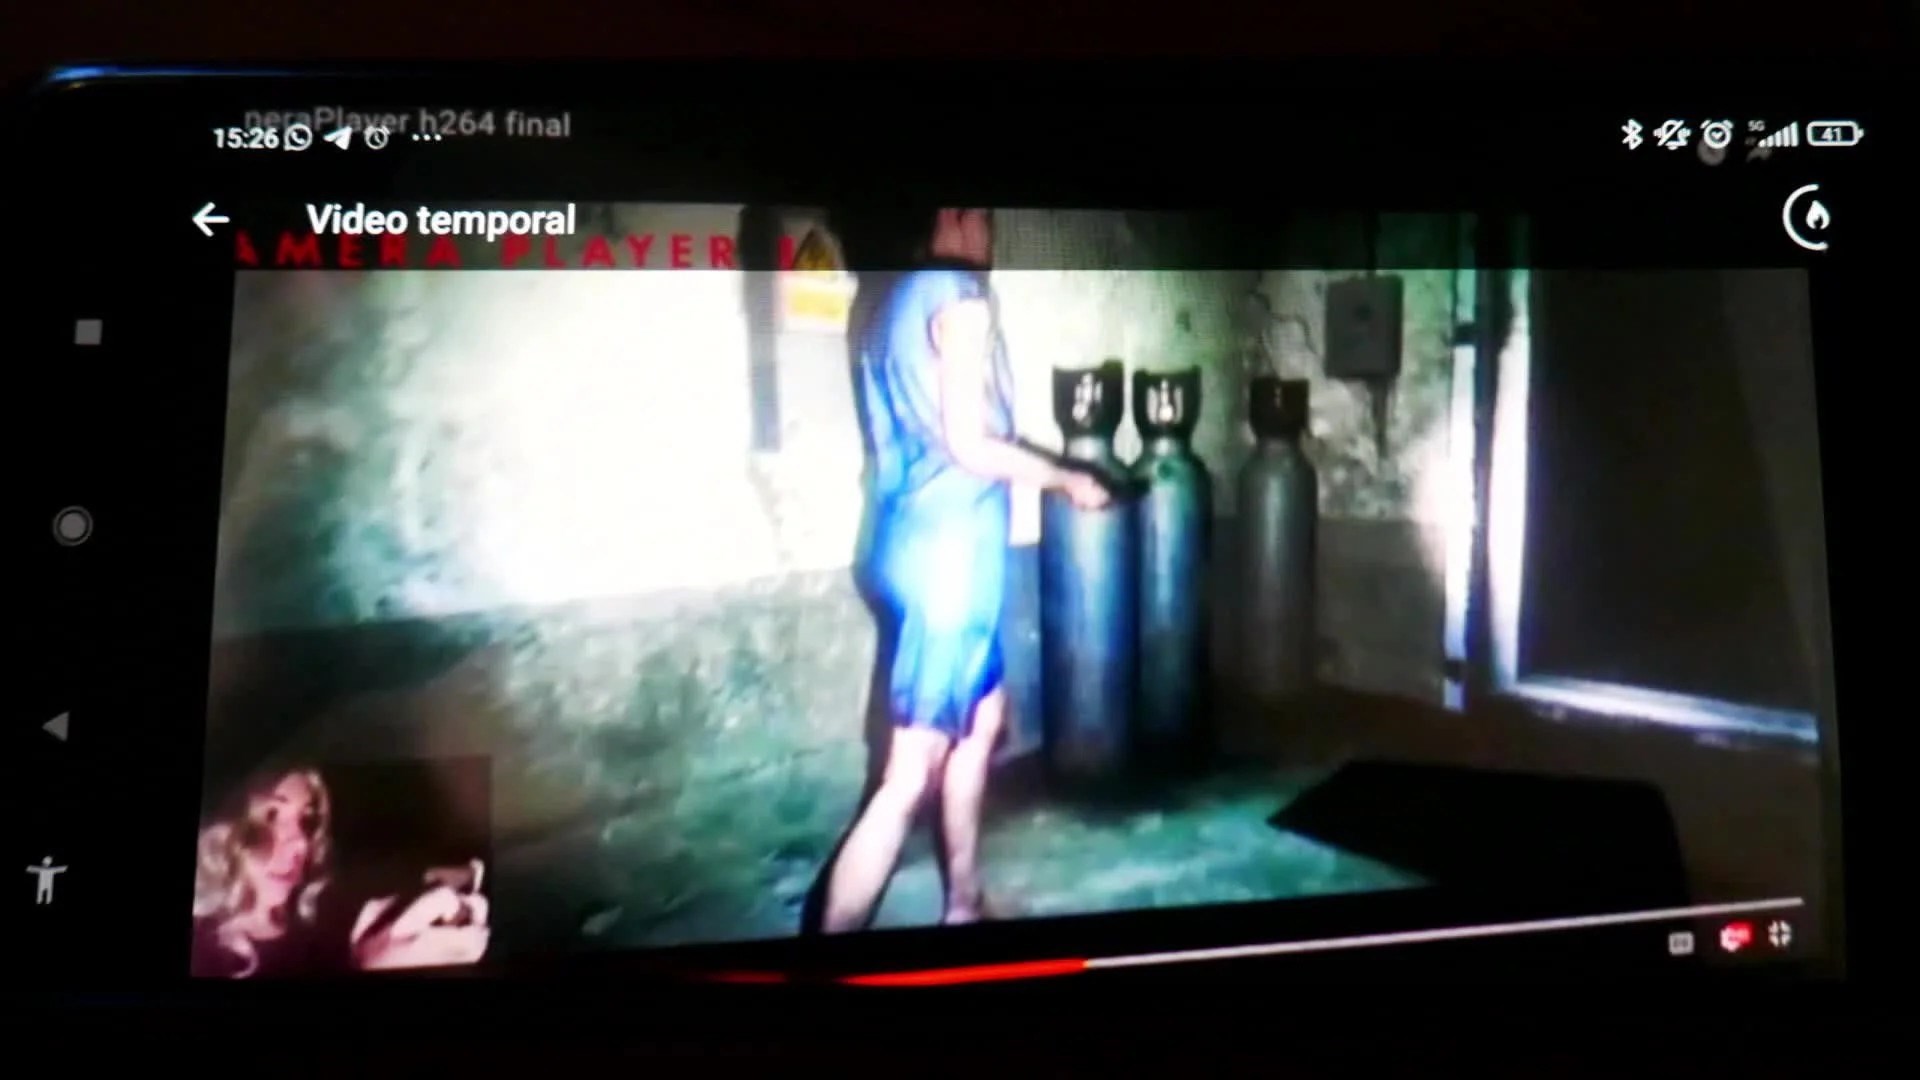 Hideo Kojima'nın korku oyunu Overdose'un oynanış videosu sızdı